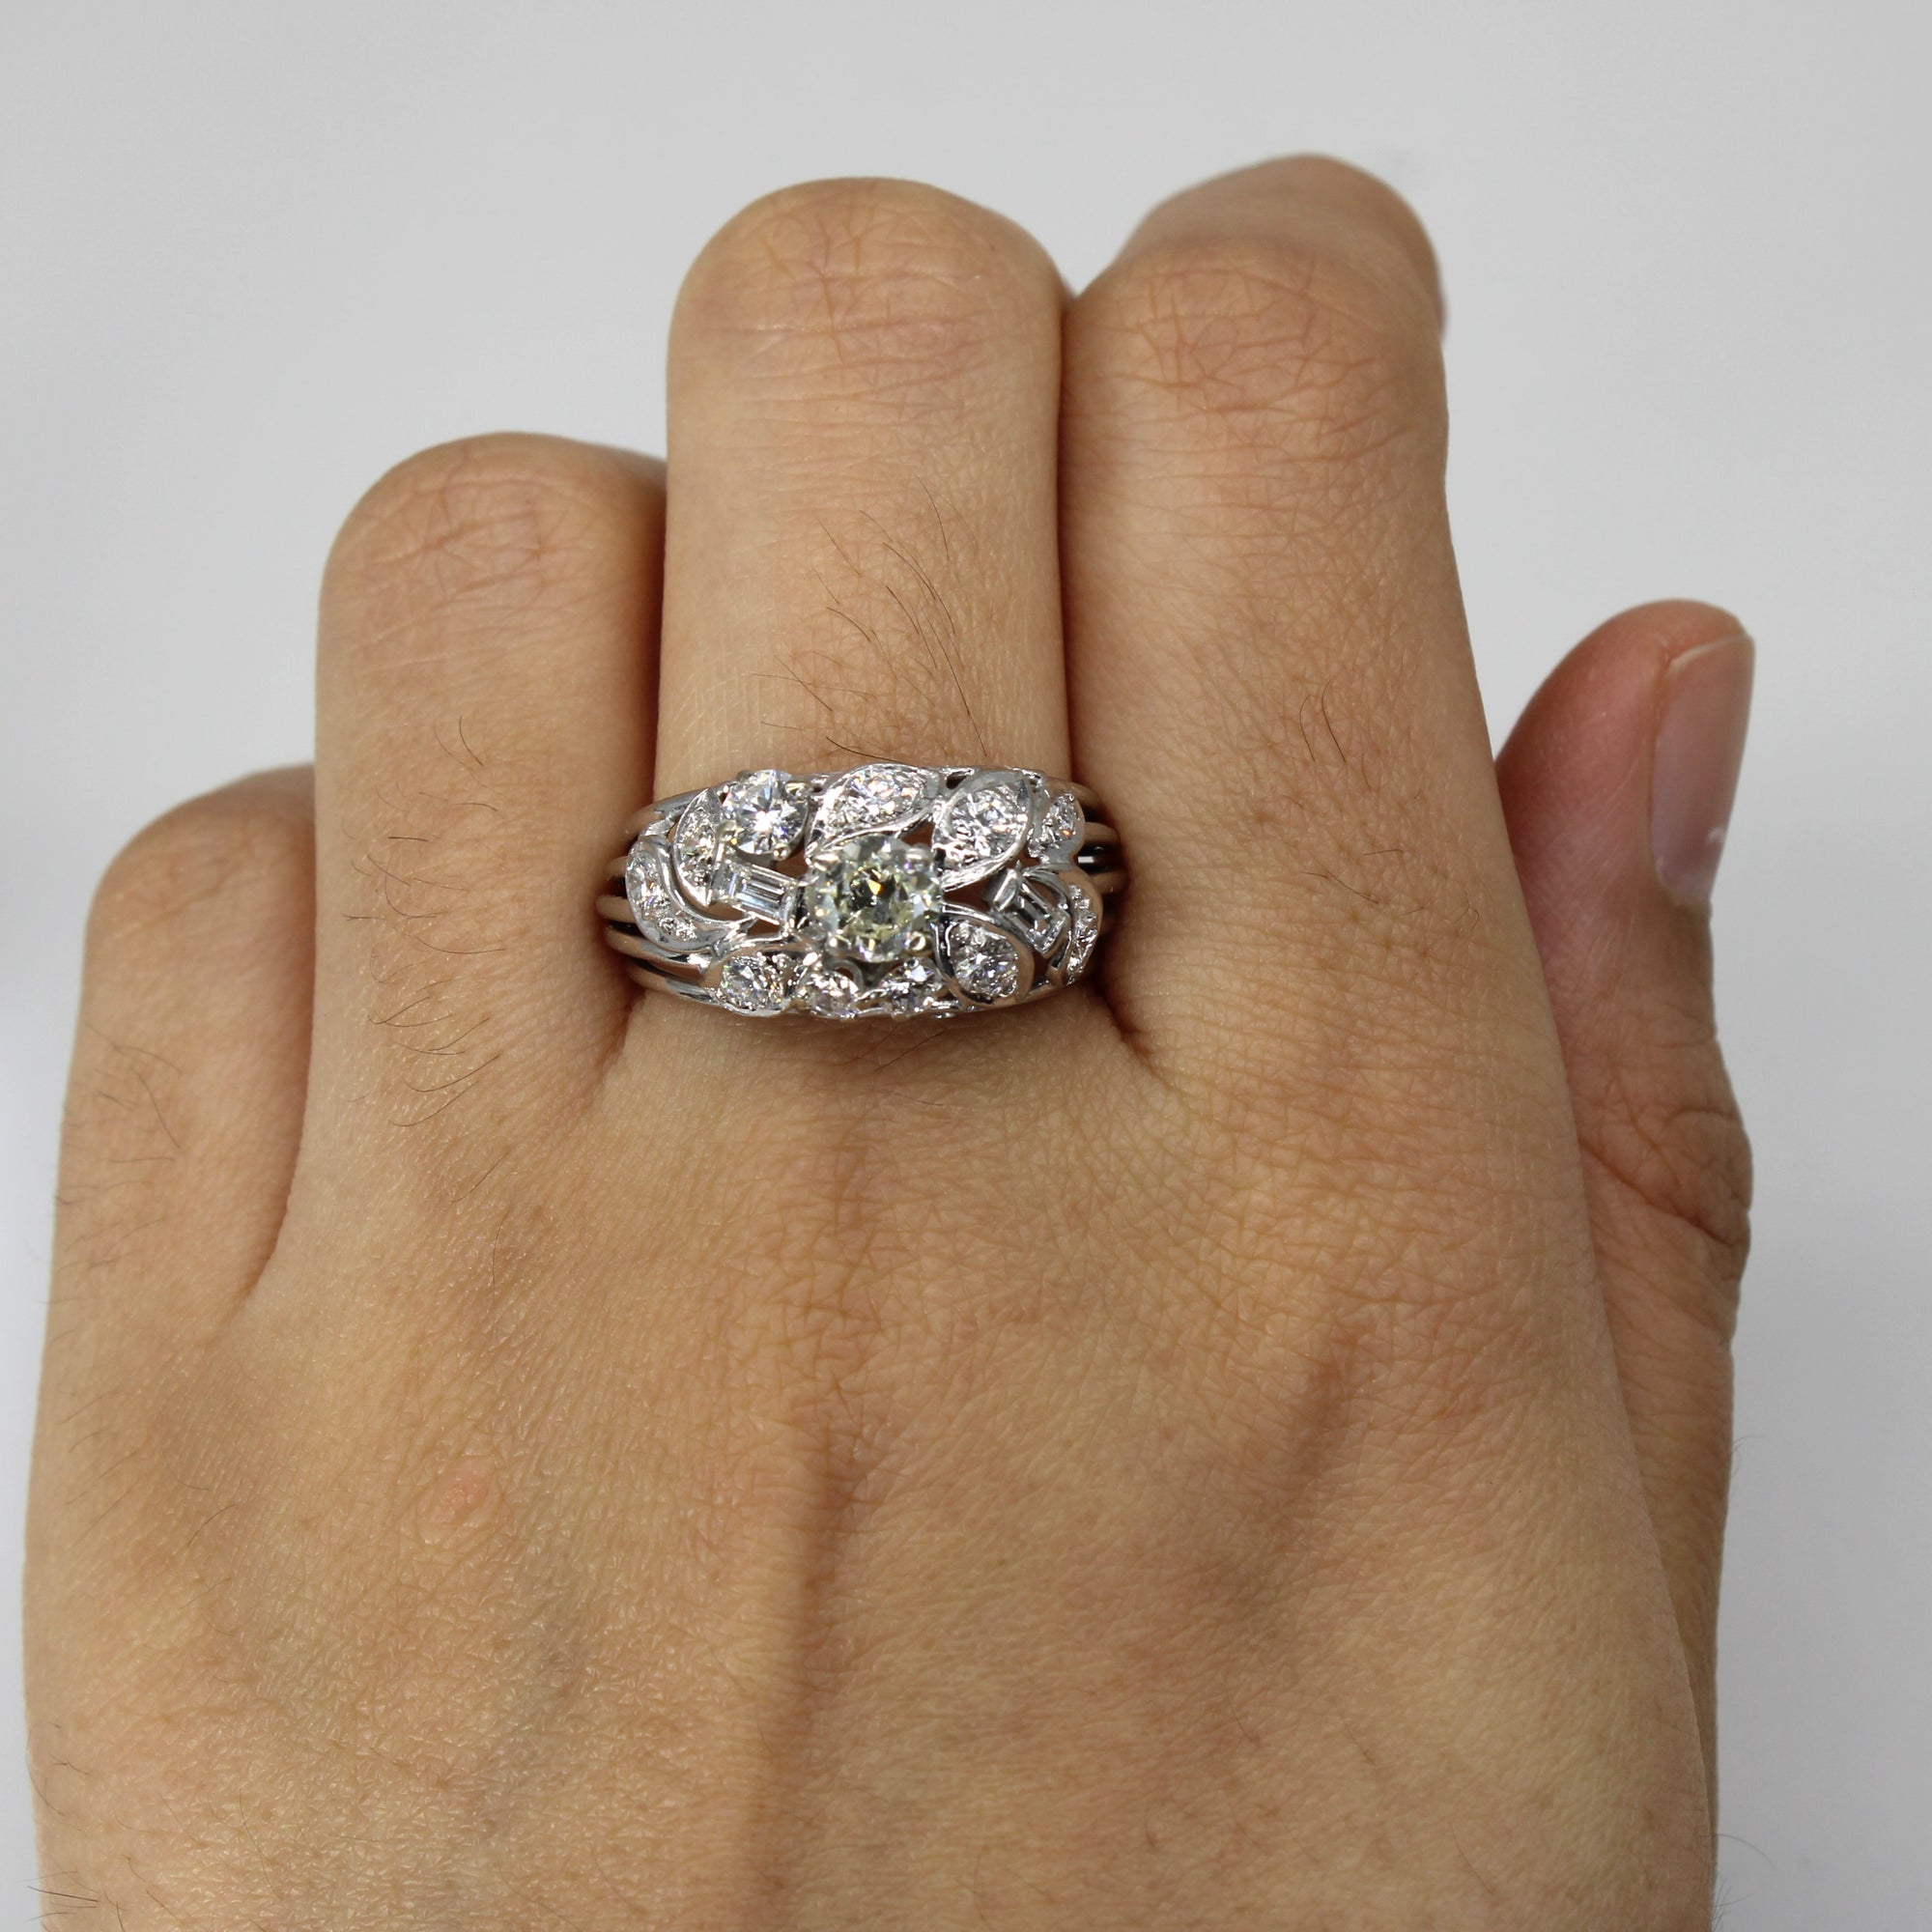 Filigree Design Diamond Ring | 1.36ctw | SZ 8.75 |